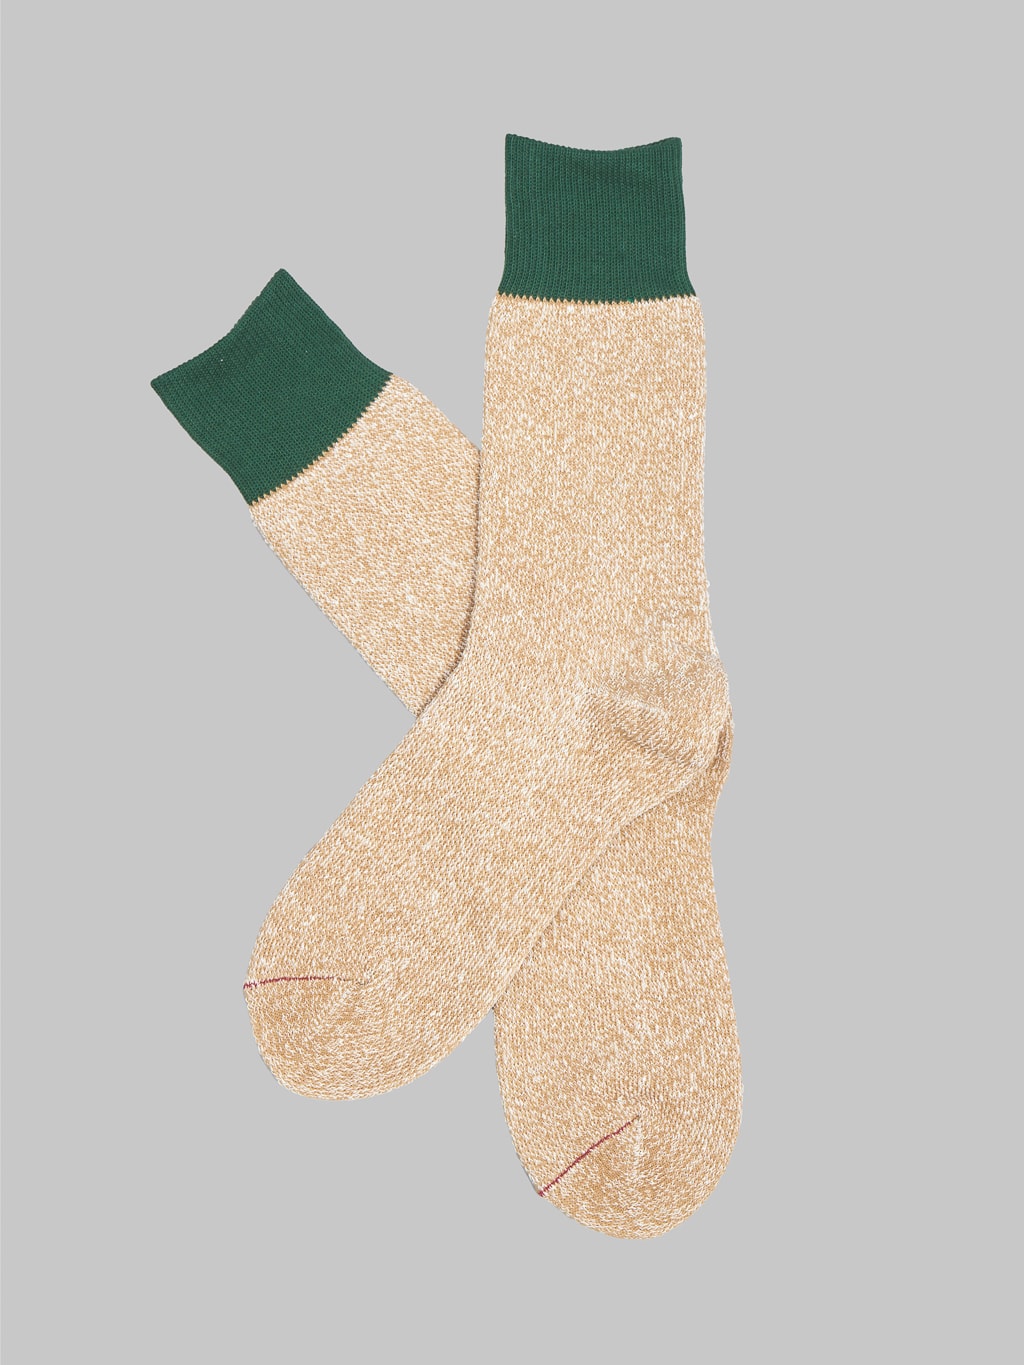 ROTOTO Double Face Crew Socks "Silk & Cotton" Dark Green/Beige